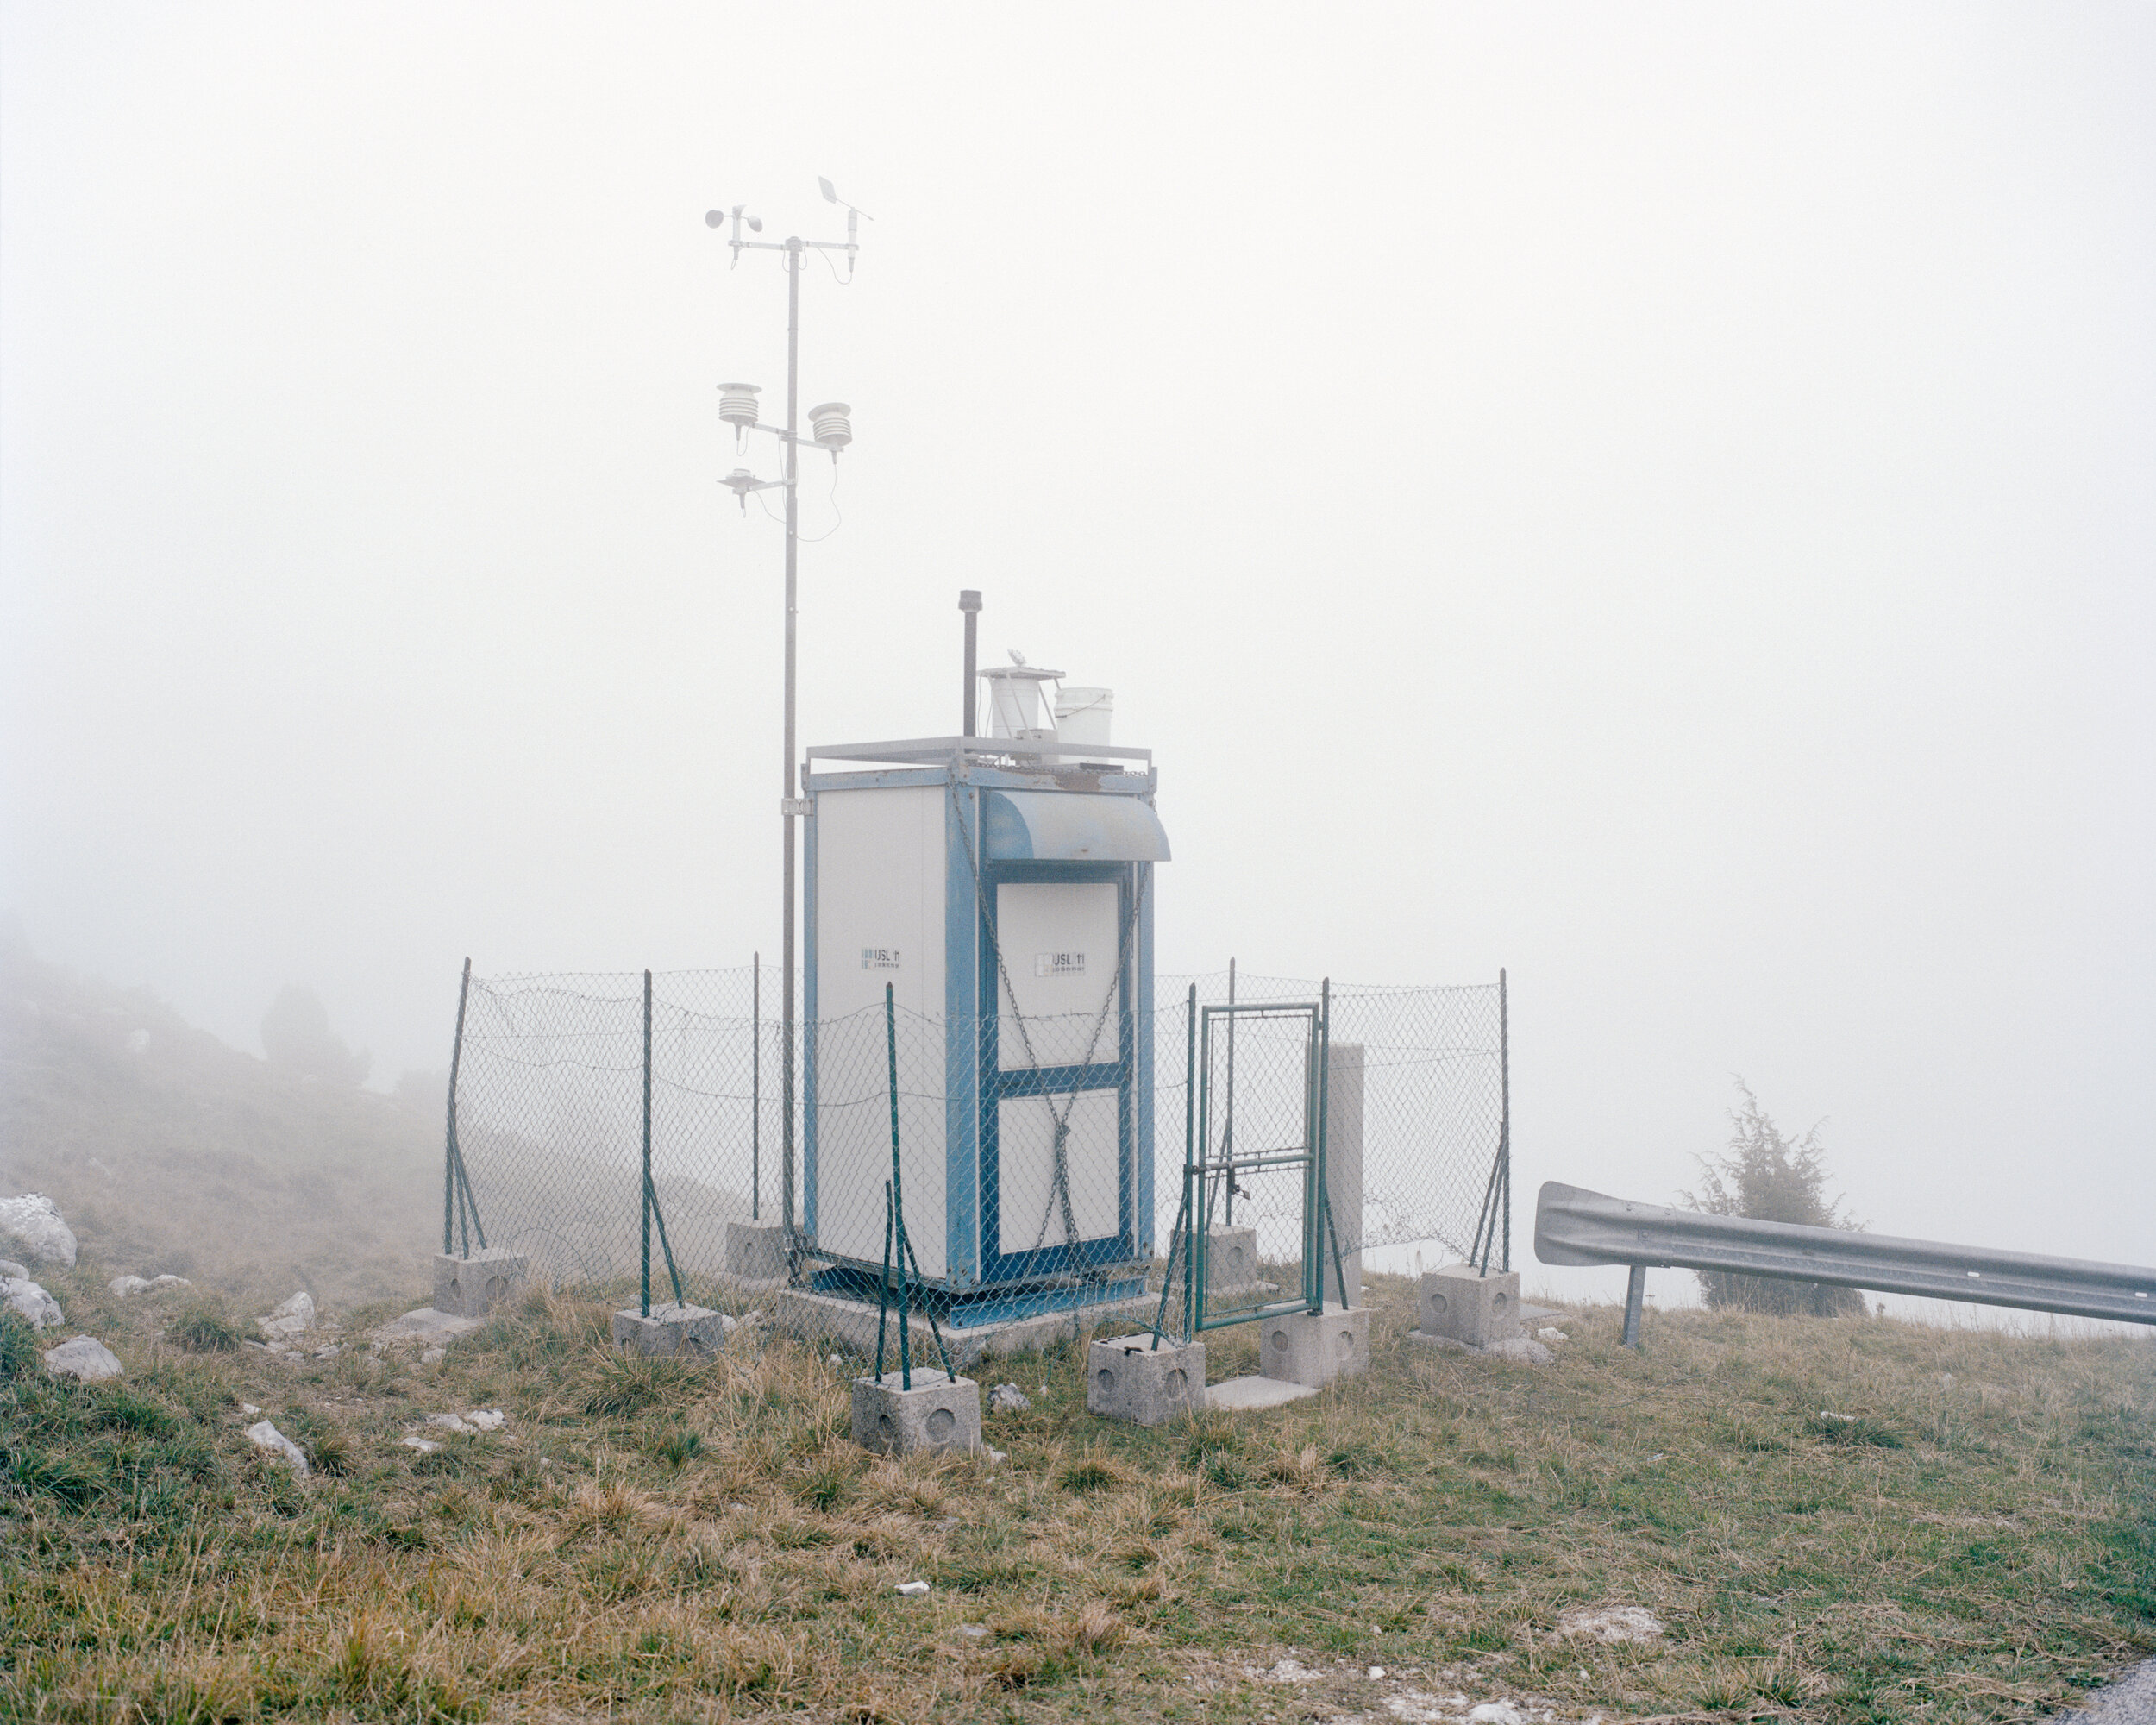 Alberto Maserin - Interferences - Untitled (meteo station).jpg